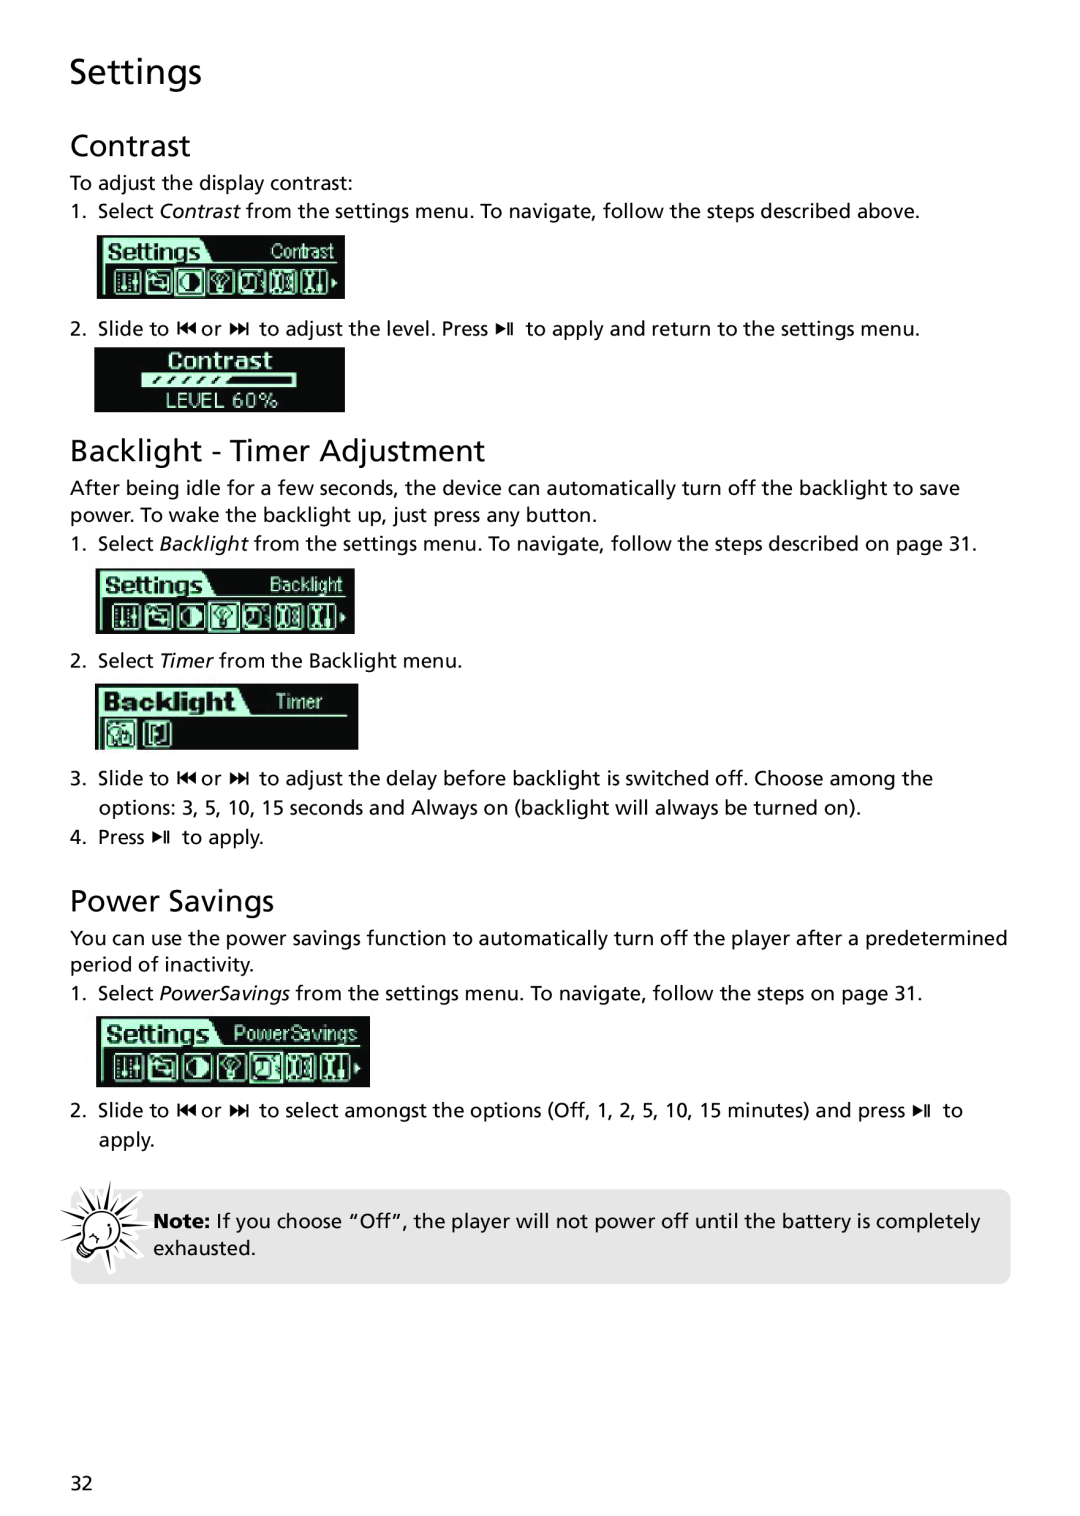 RCA TH1401 user manual Contrast, Backlight - Timer Adjustment, Power Savings, Settings 